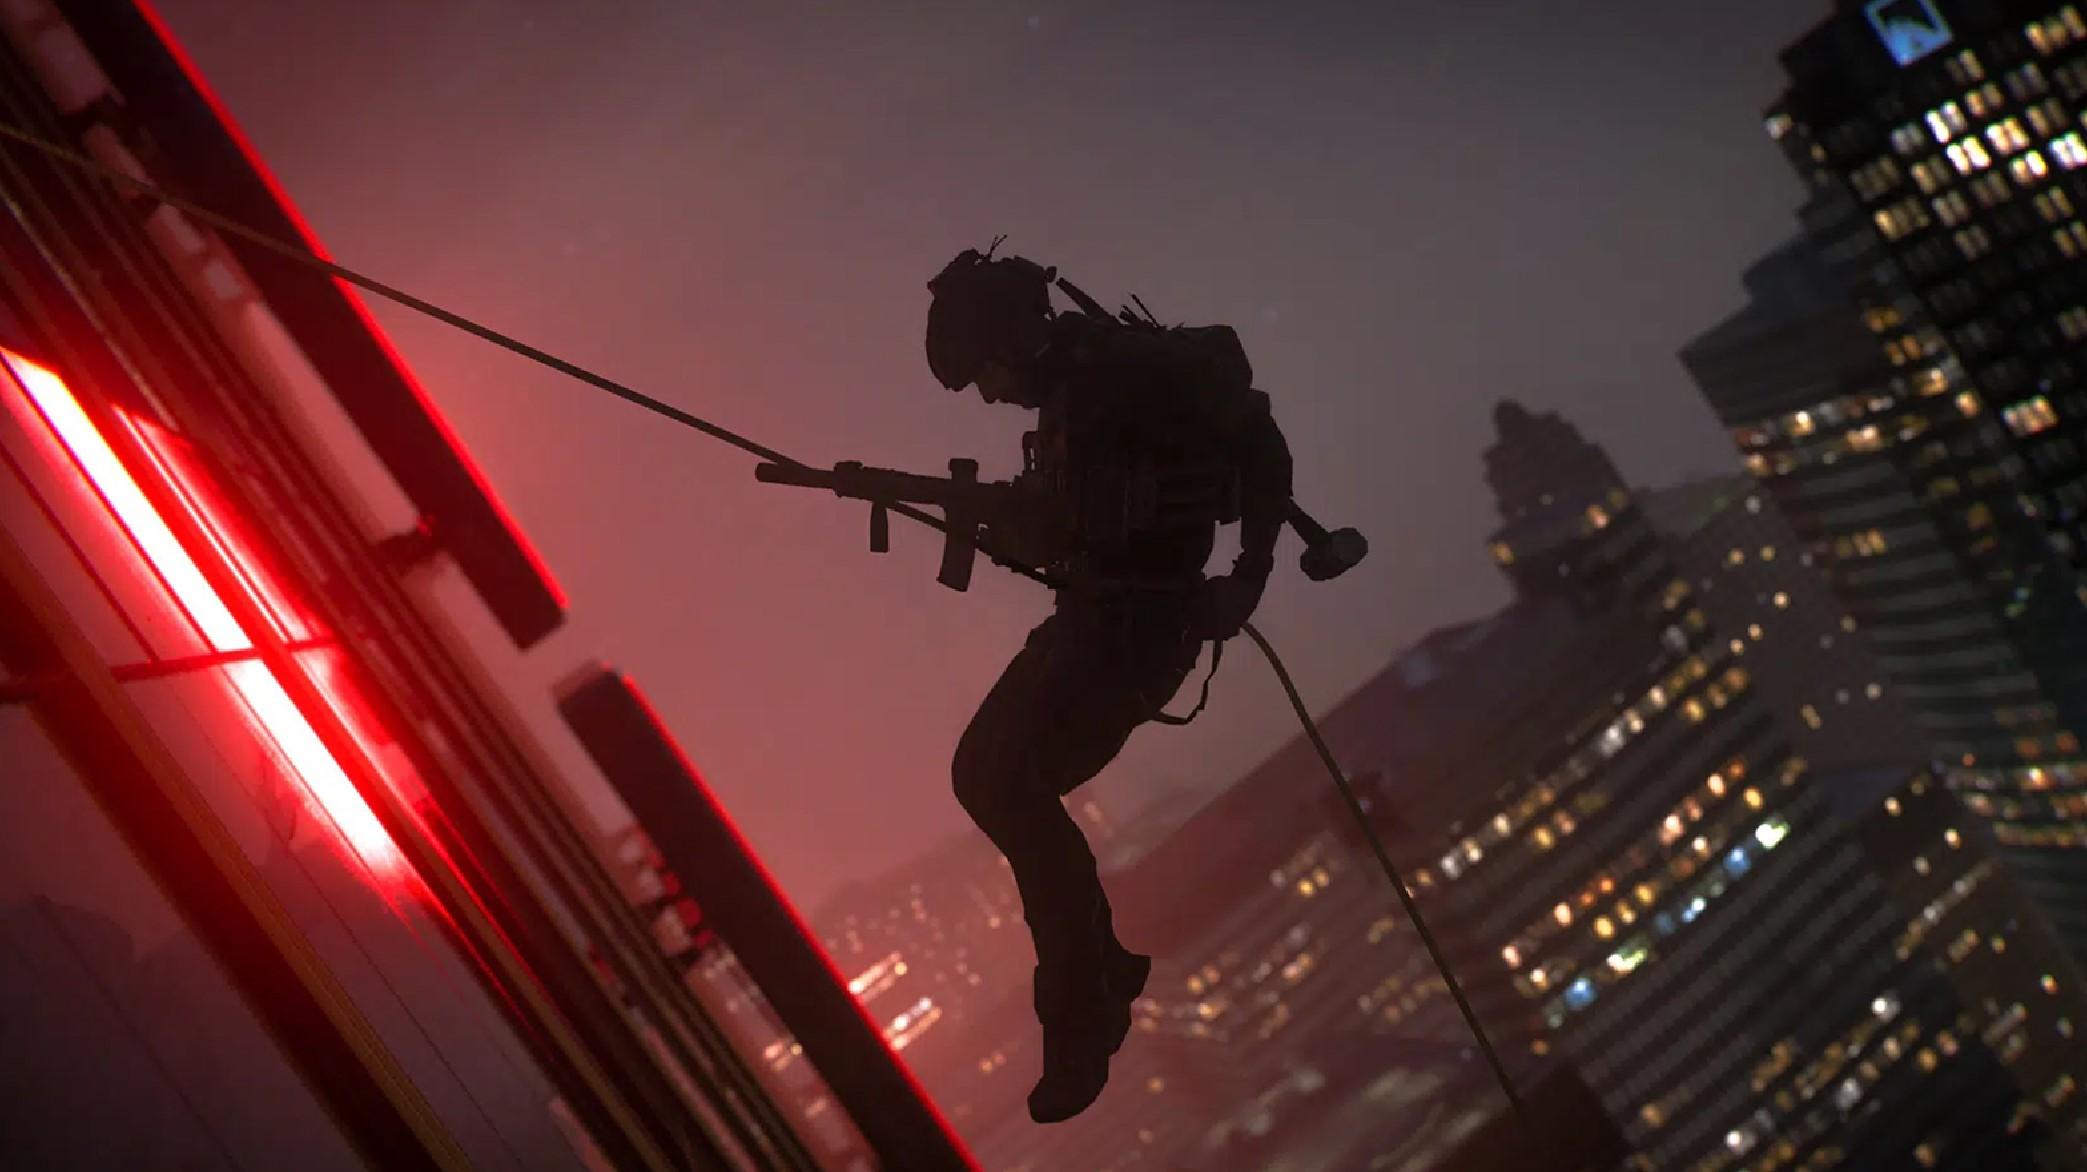 Call of Duty: Modern Warfare 2 Beta Update Brings Back Ground War